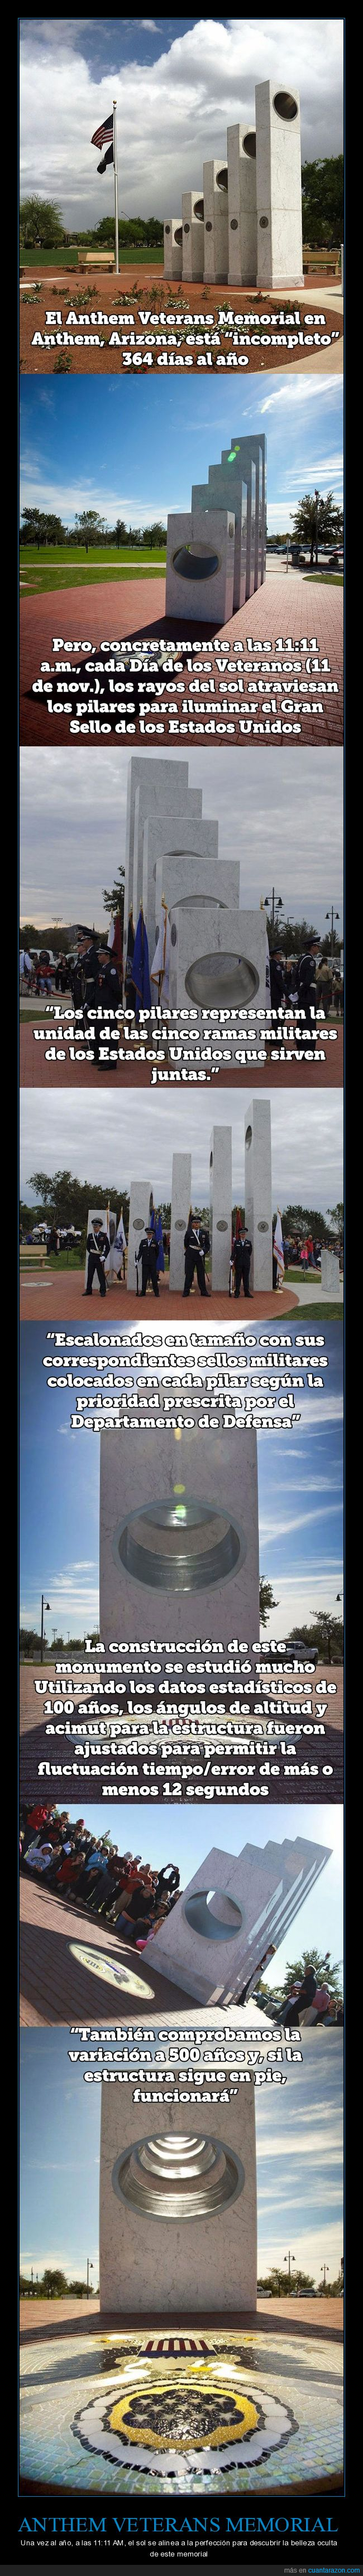 monumento,memorial,veteranos,anthem veterans memorial